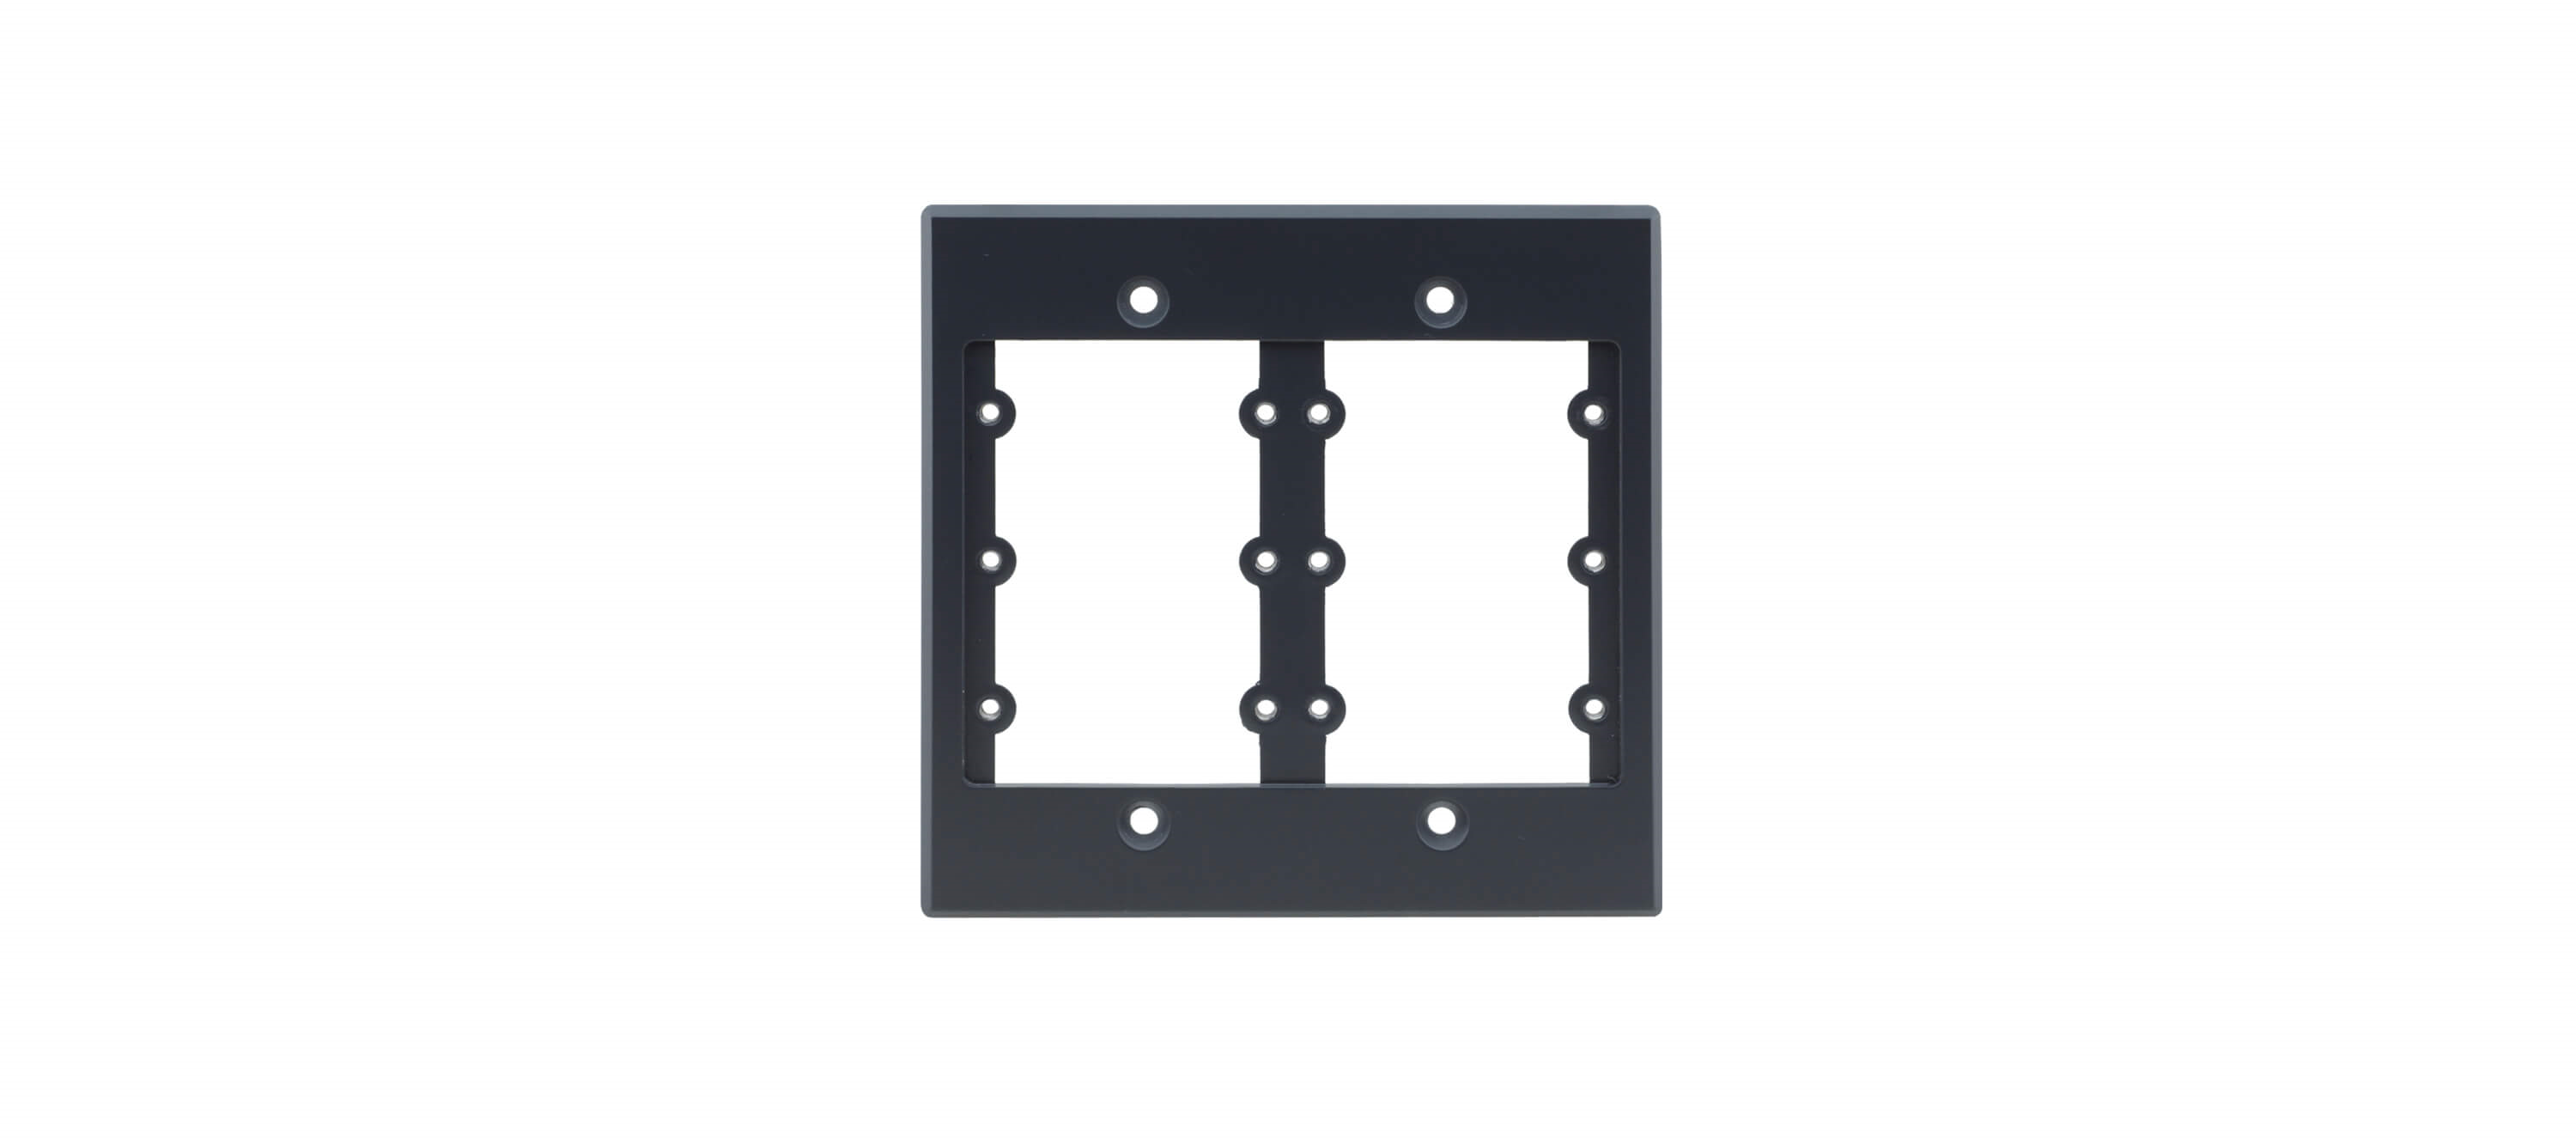 FRAME-2G(B) Frame for Wall Plate Inserts — 2 Gang - Black